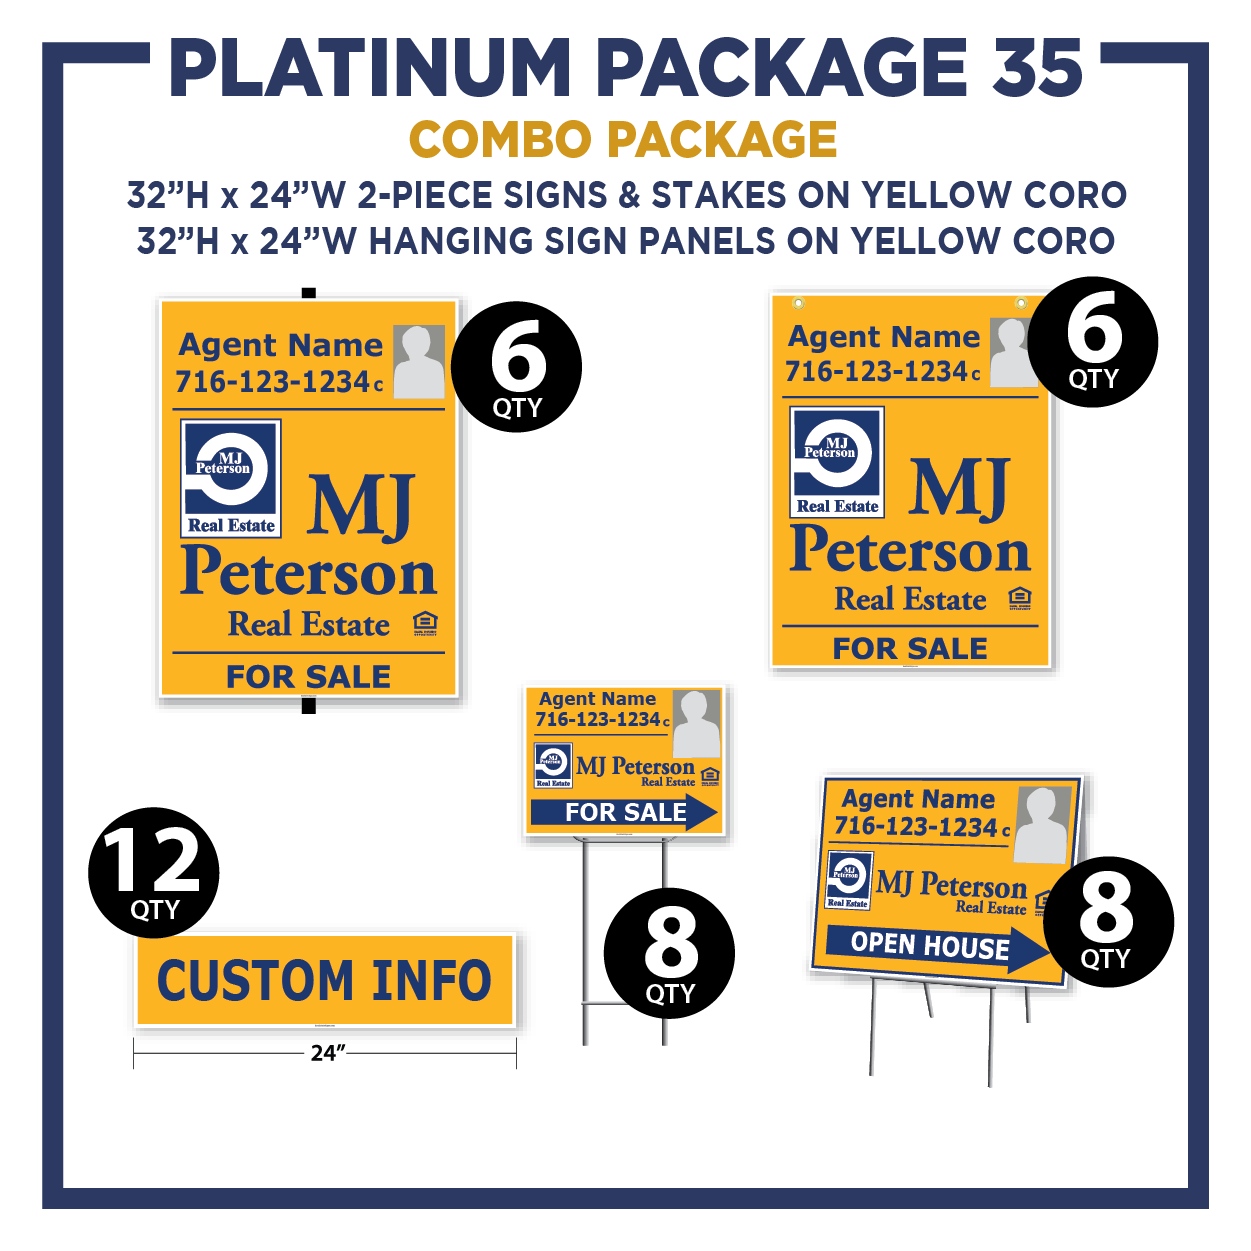 MJ PLATINUM package 35